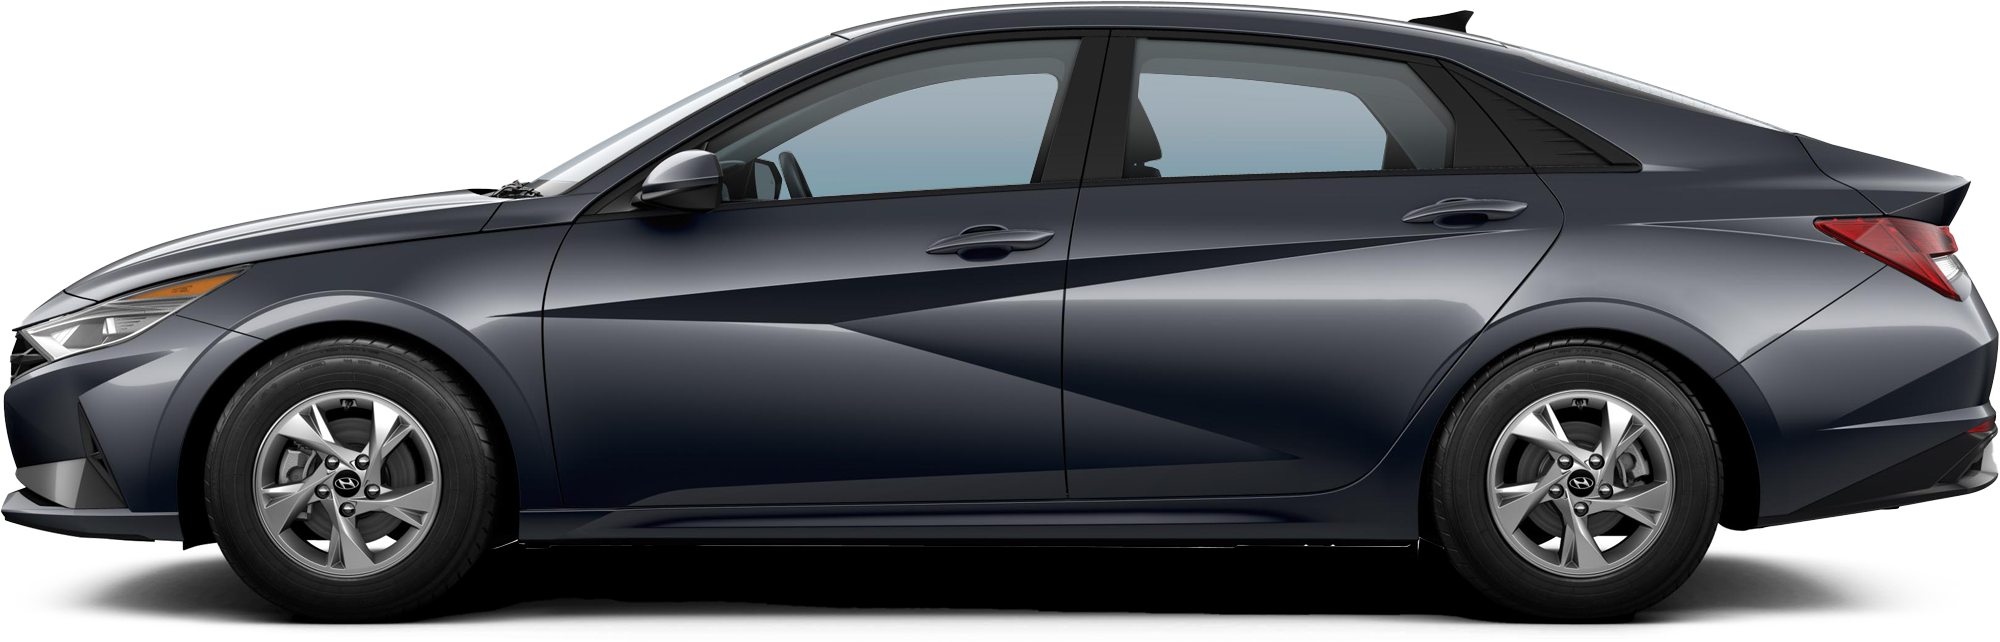 http://images.dealer.com/ddc/vehicles/2023/Hyundai/Elantra/Sedan/trim_SE_8e1487/perspective/side-left/2023_24.png